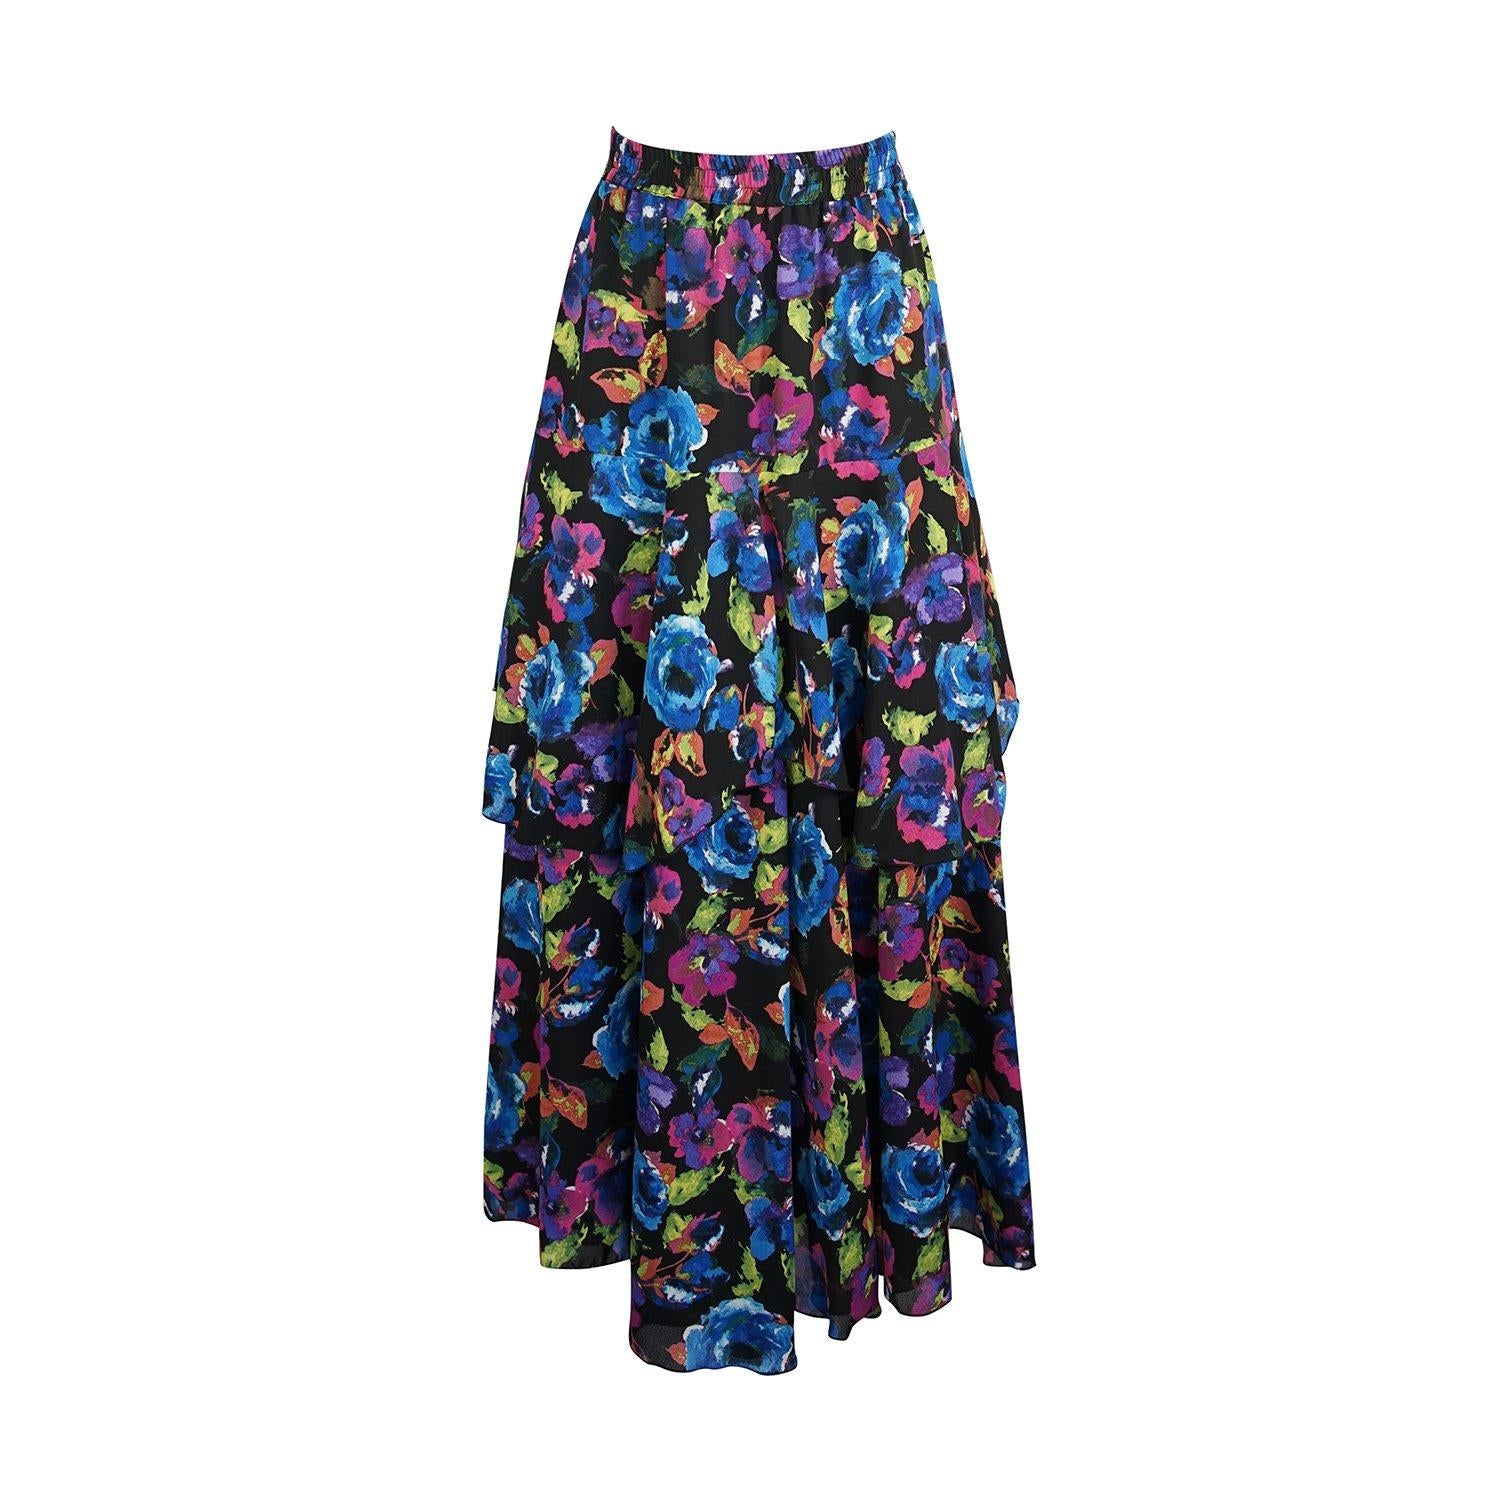 colorful, floral, gorgeous, seraphim skirt, ruffle skirt, ruffle, boho, chic, handmade, madeinusa, jennafergrace